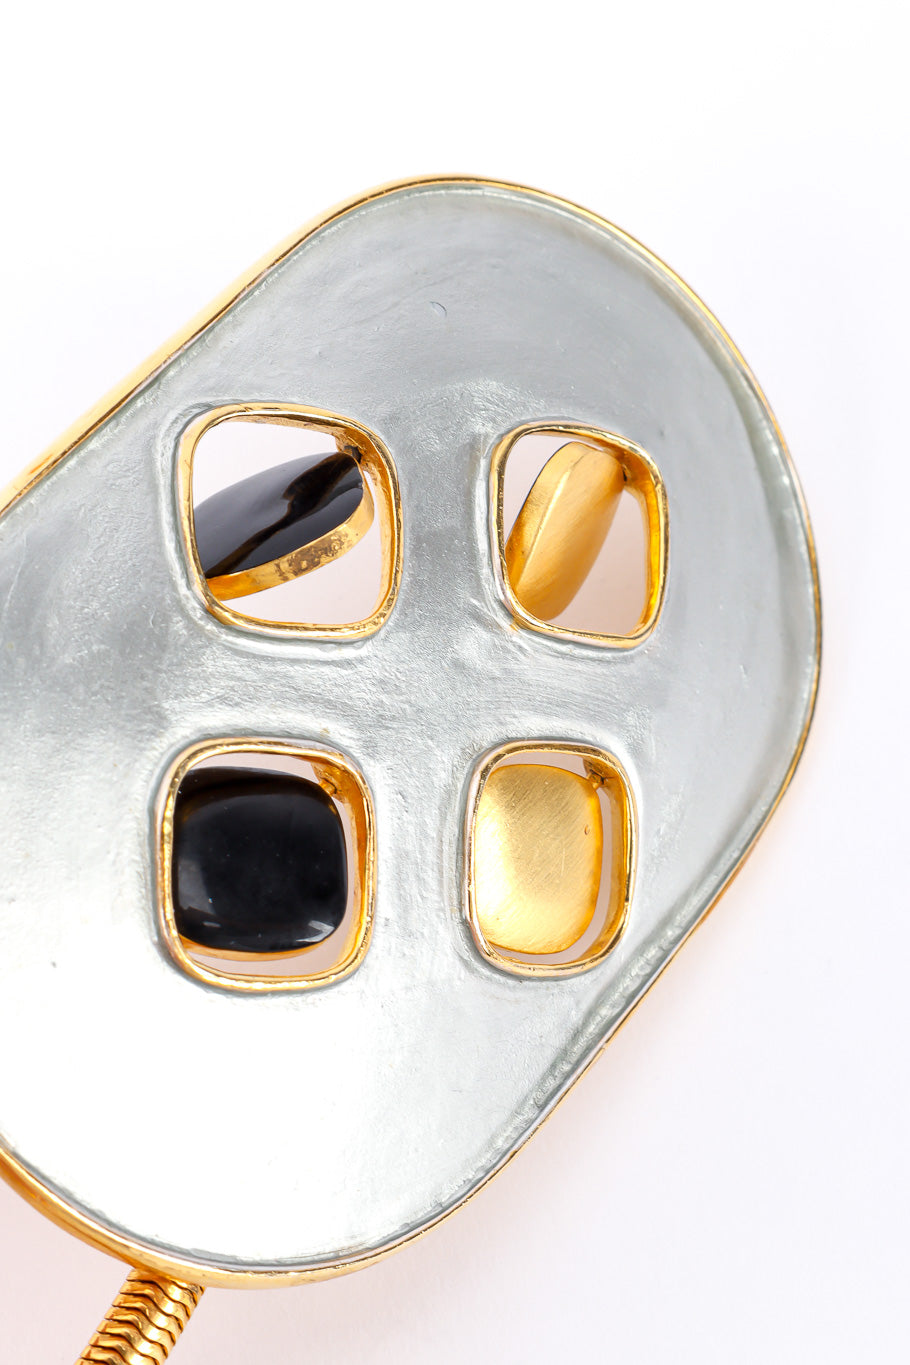 Vintage Pierre Cardin Revolving Charm Tablet Necklace revolving charm closeup @Recessla